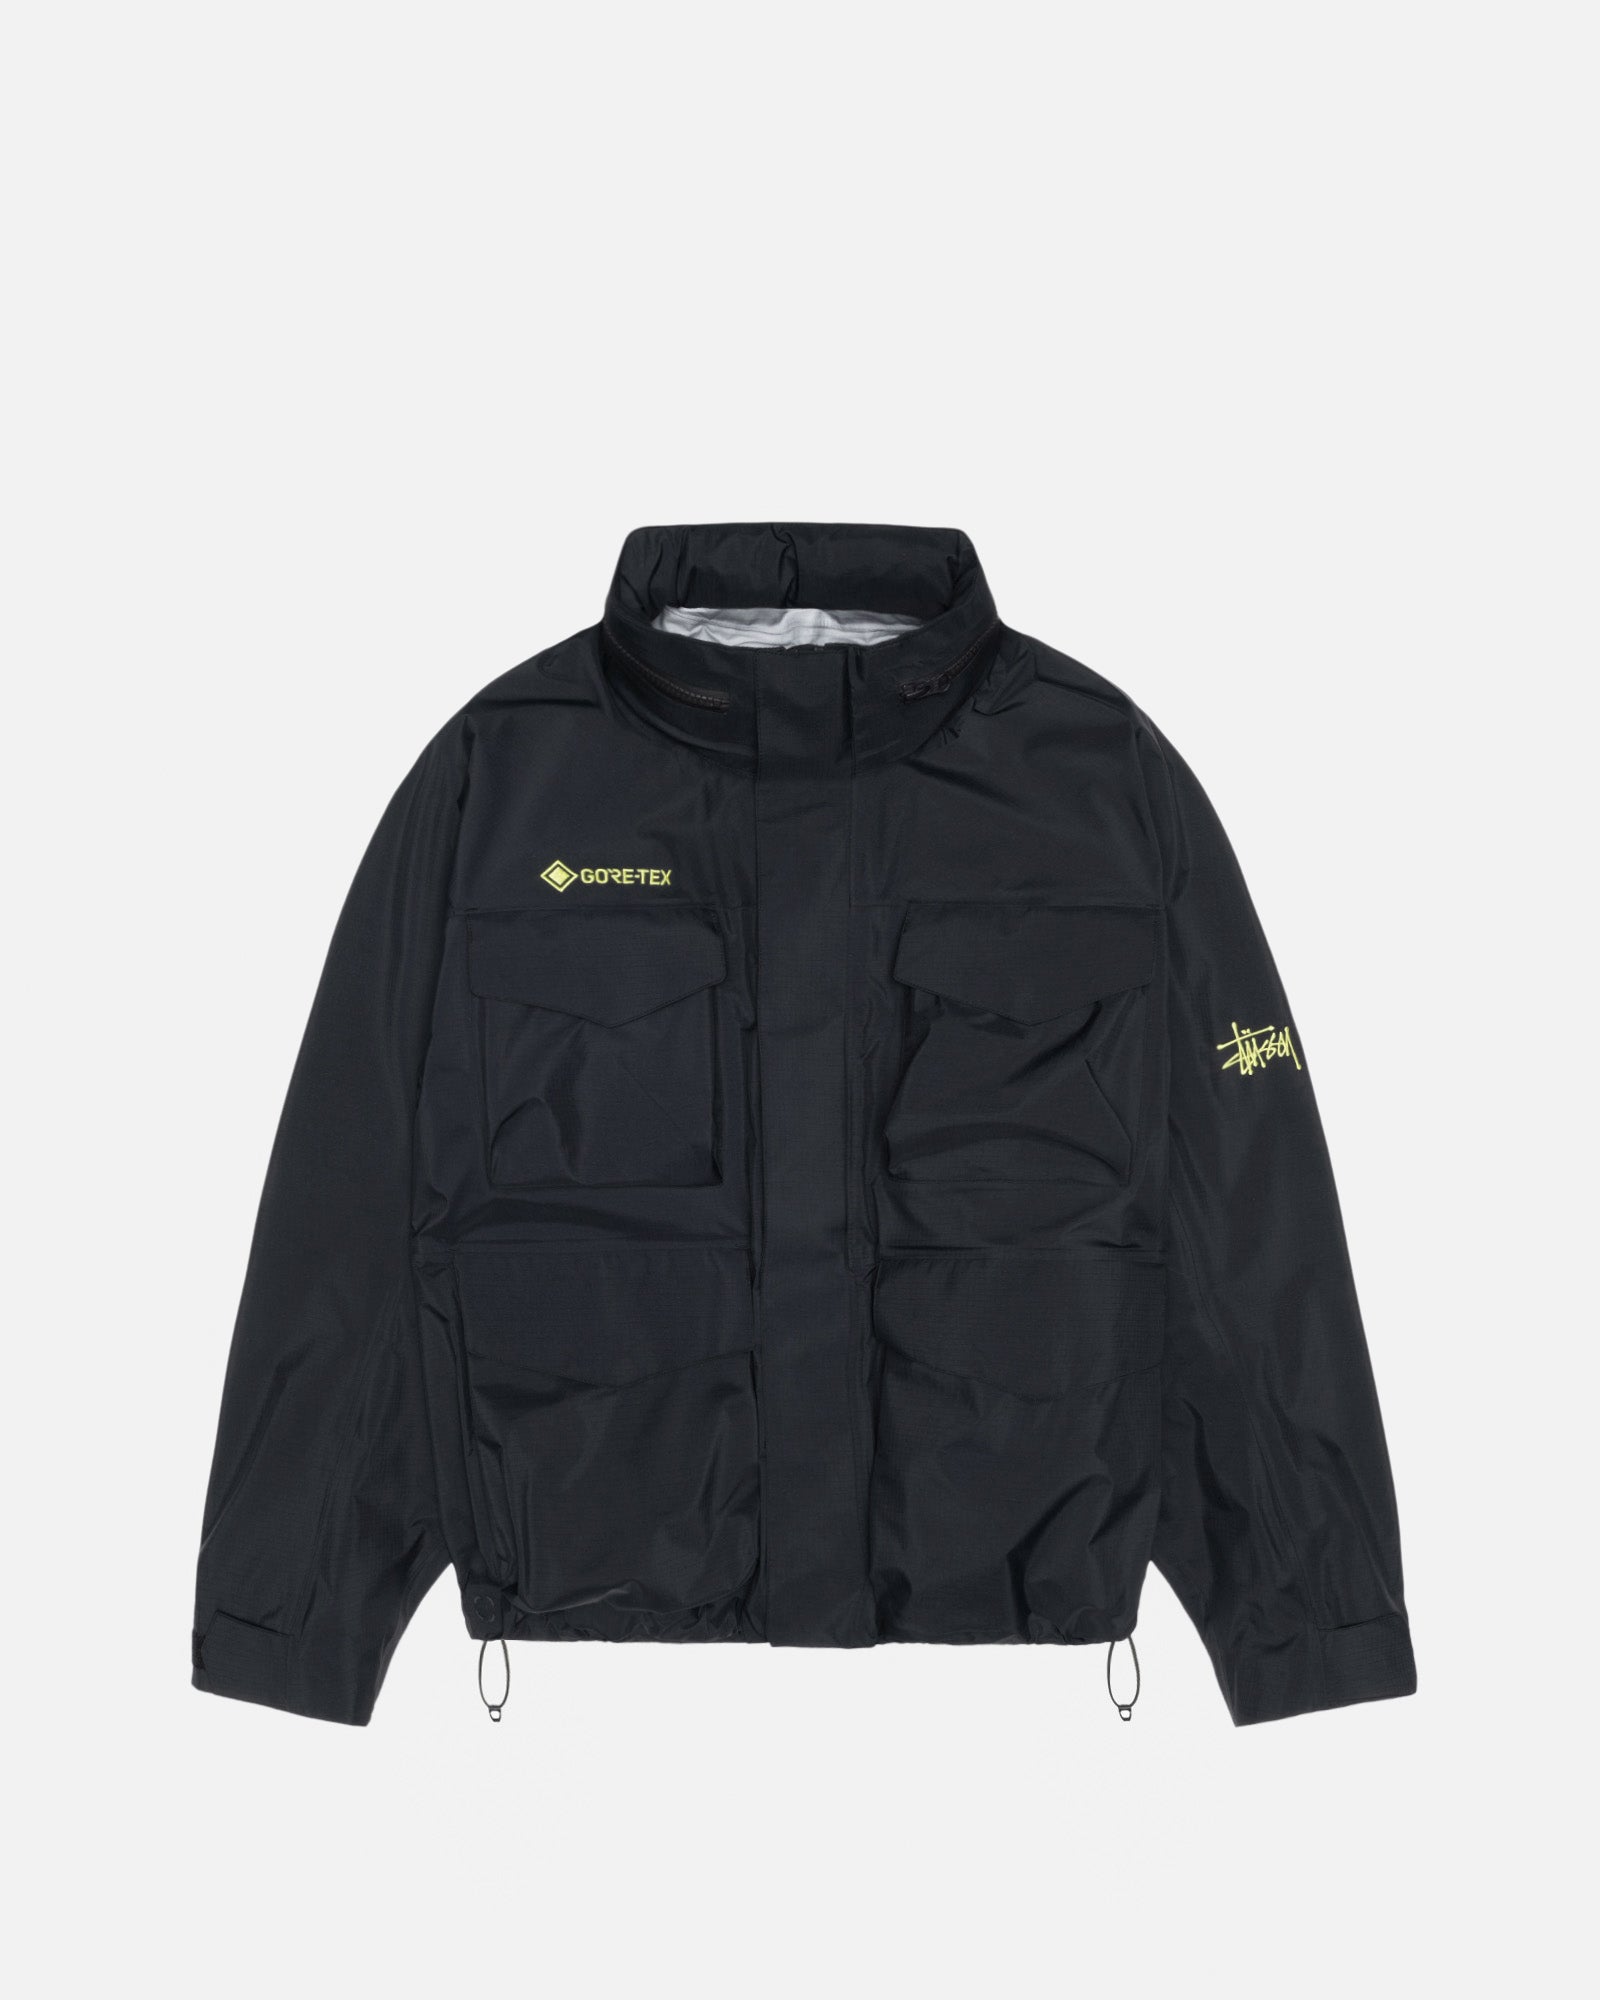 Gore-Tex M65 Jacket in black – Stüssy Japan